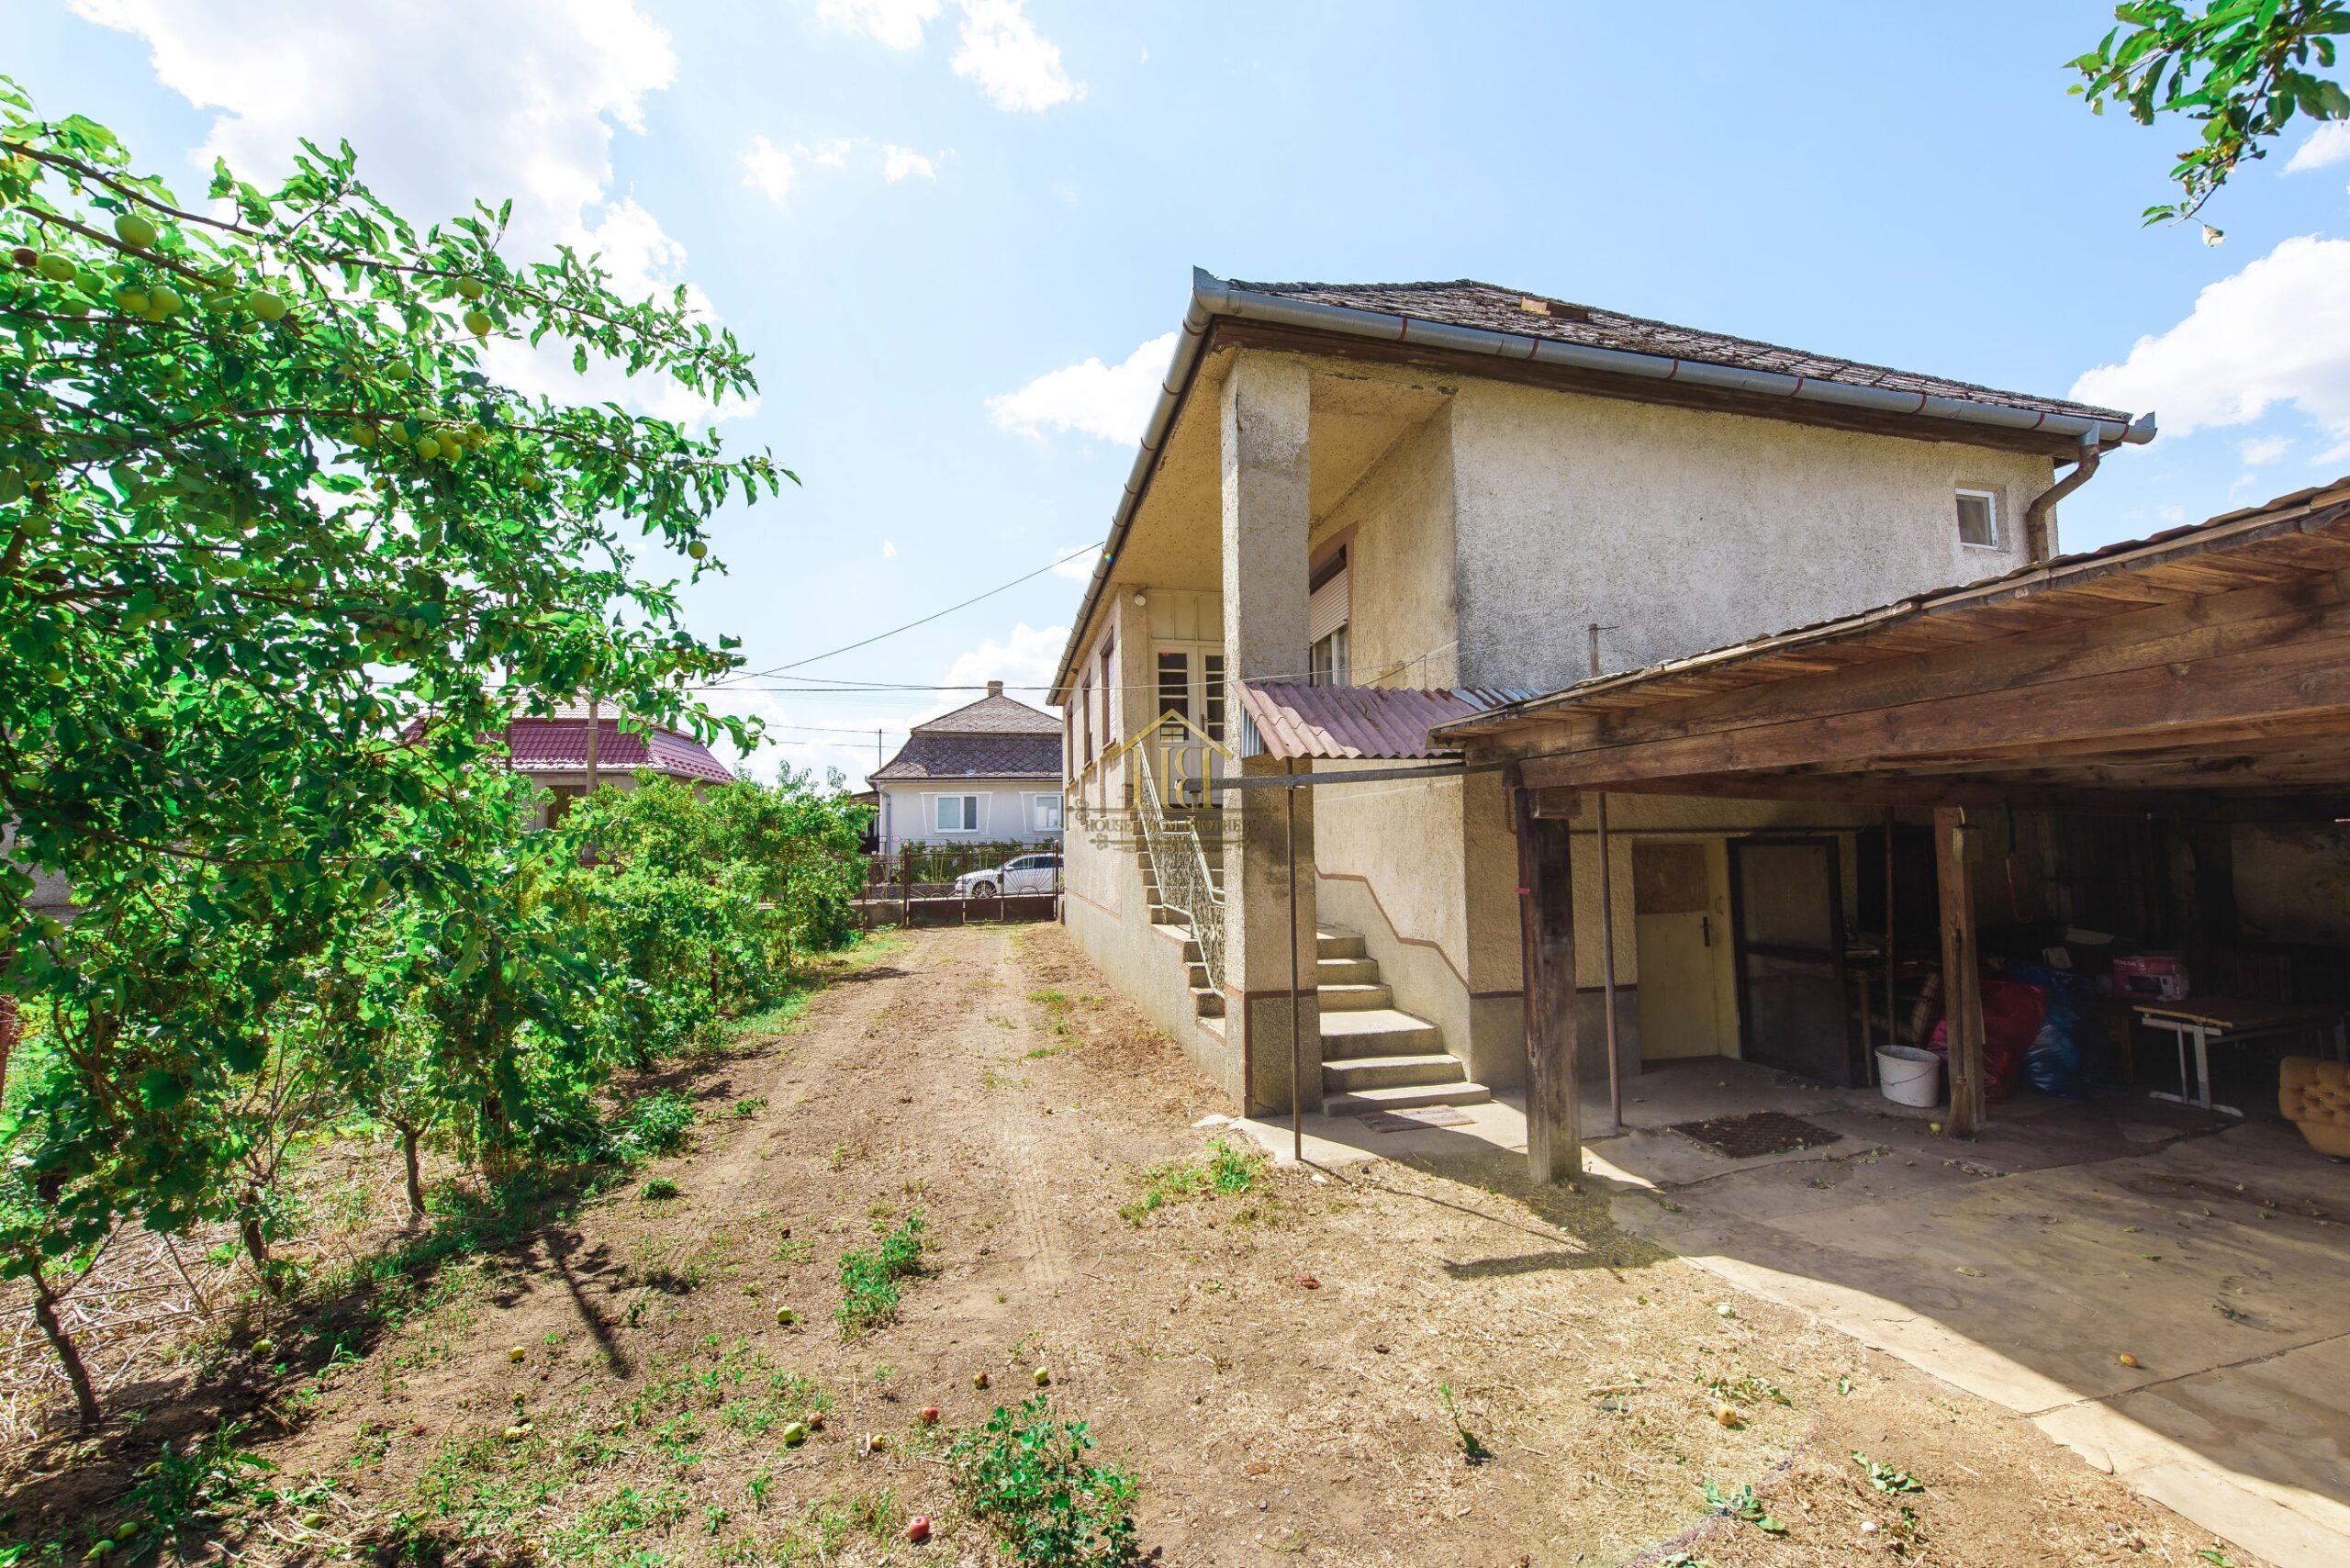 Znížená cena – Rodinný dom v zachovalom stave v obci Svätuše